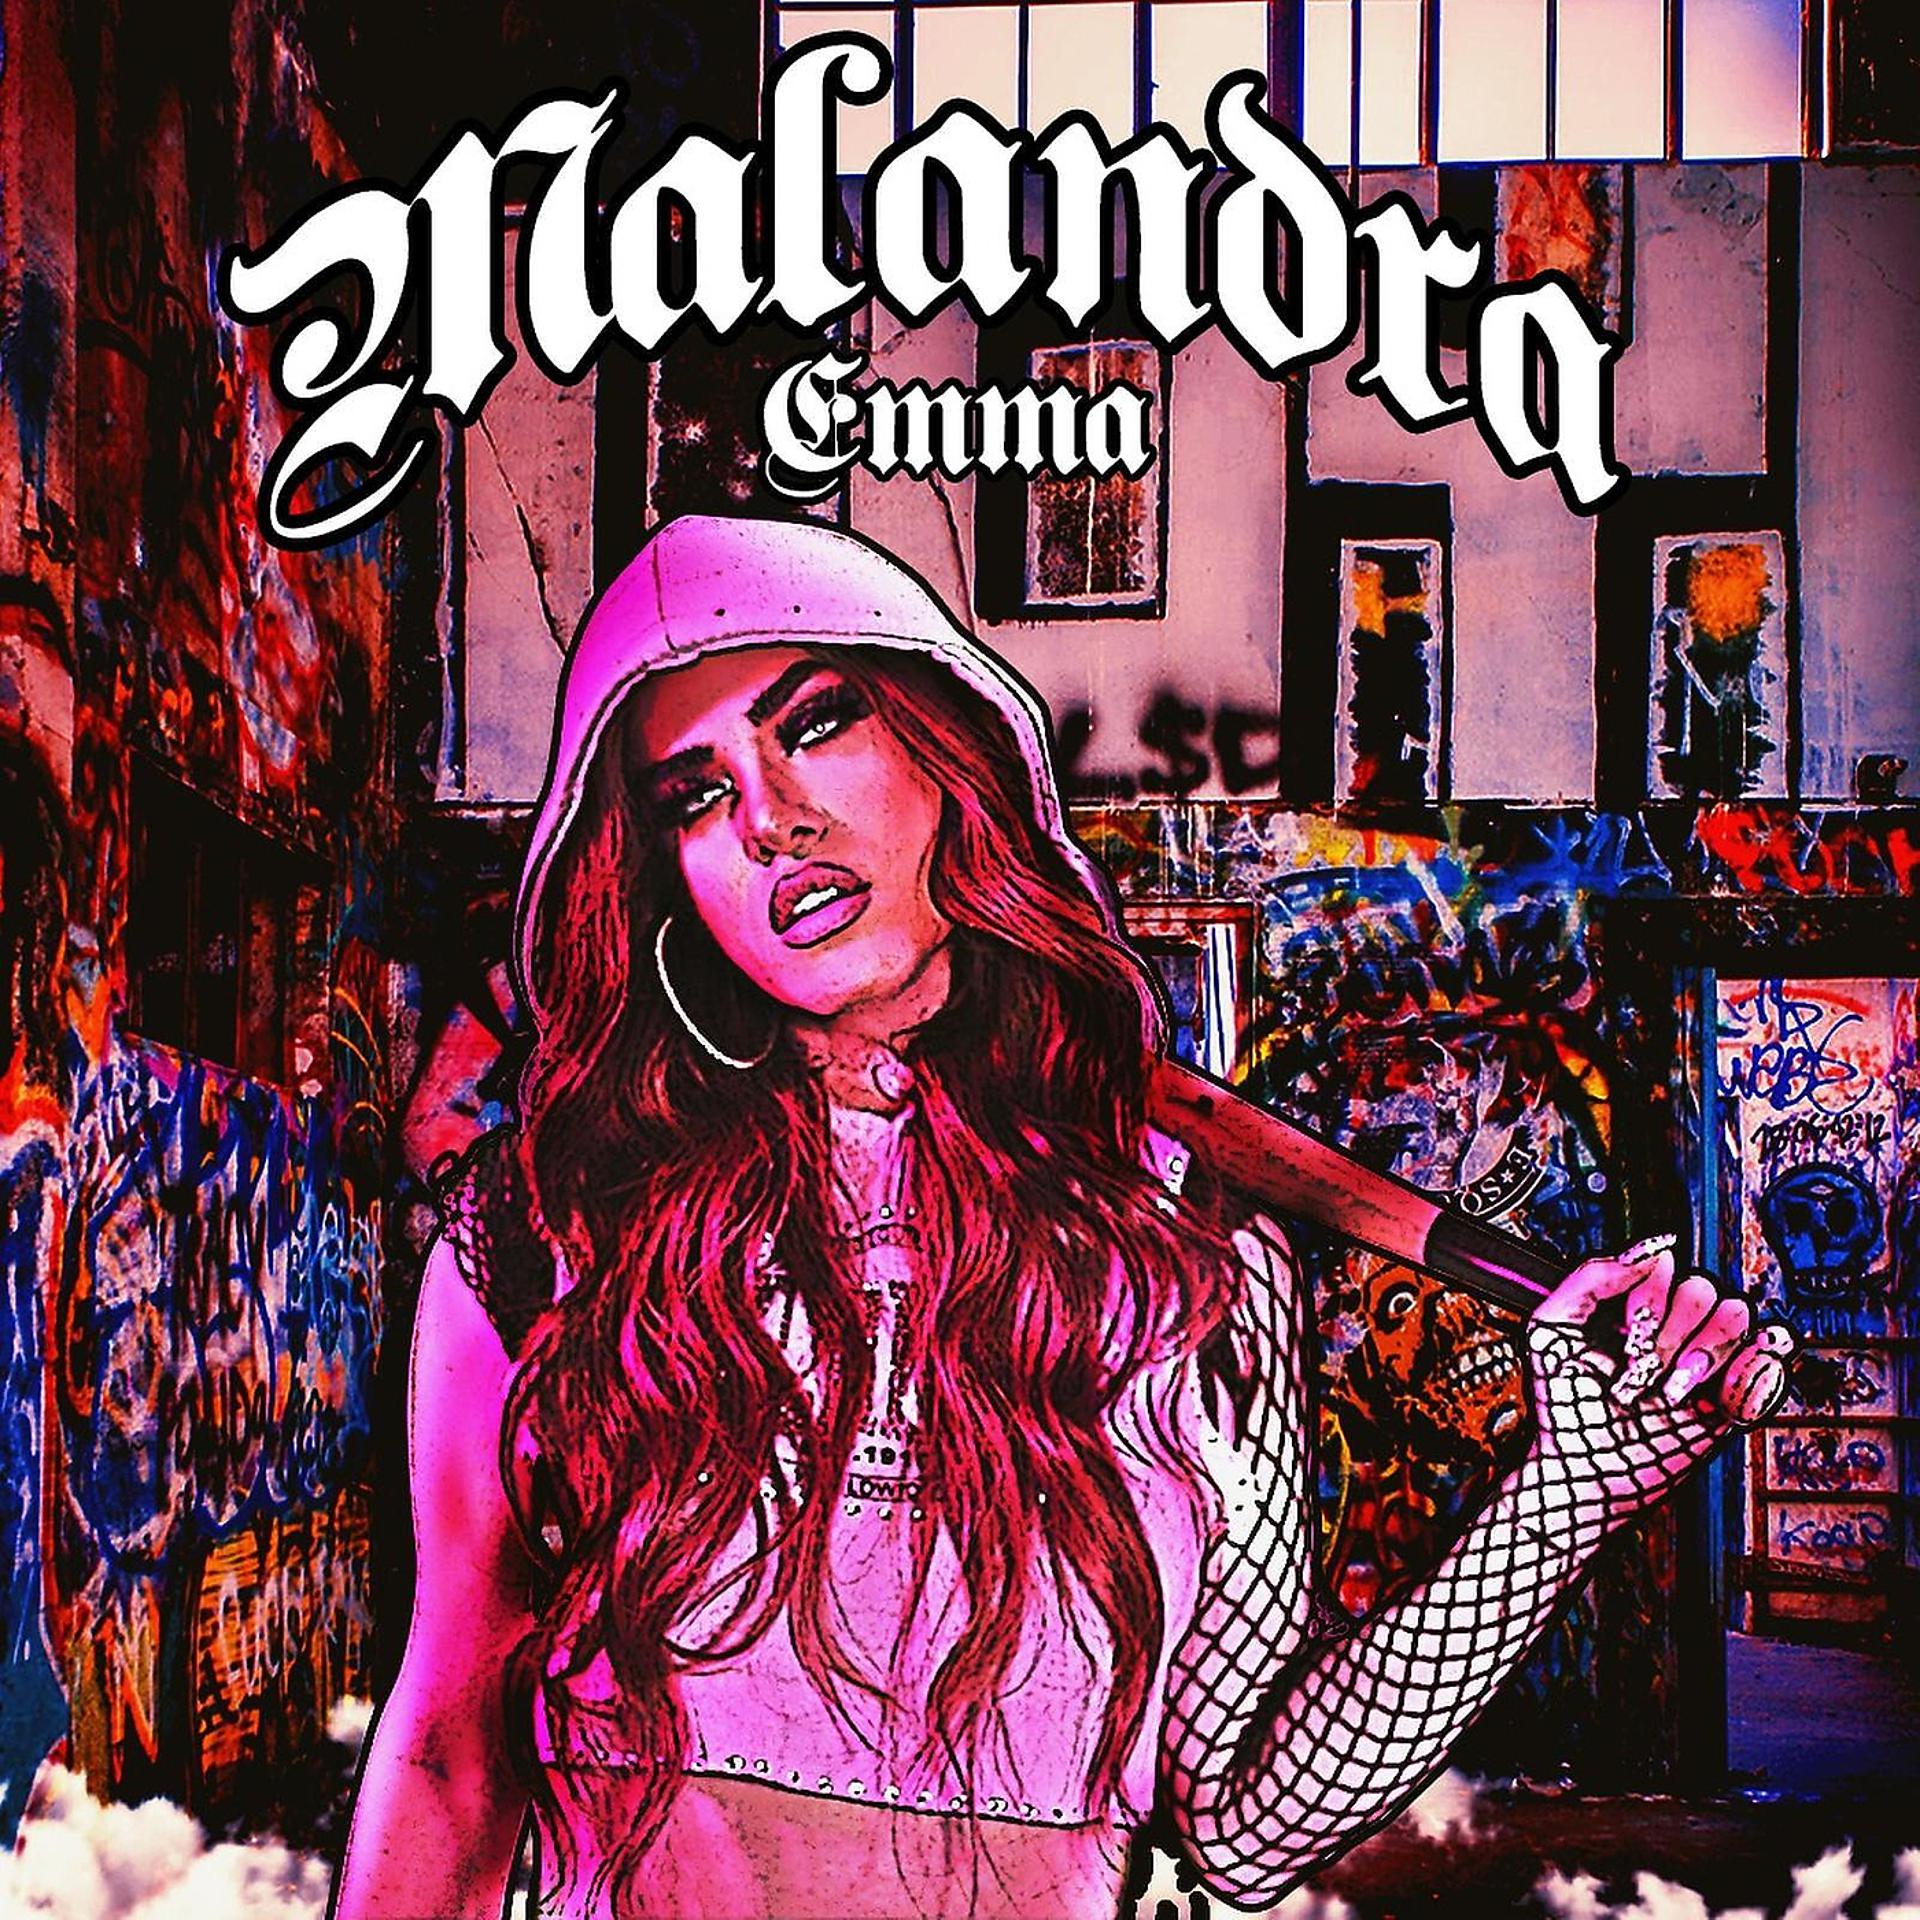 Постер альбома Malandra